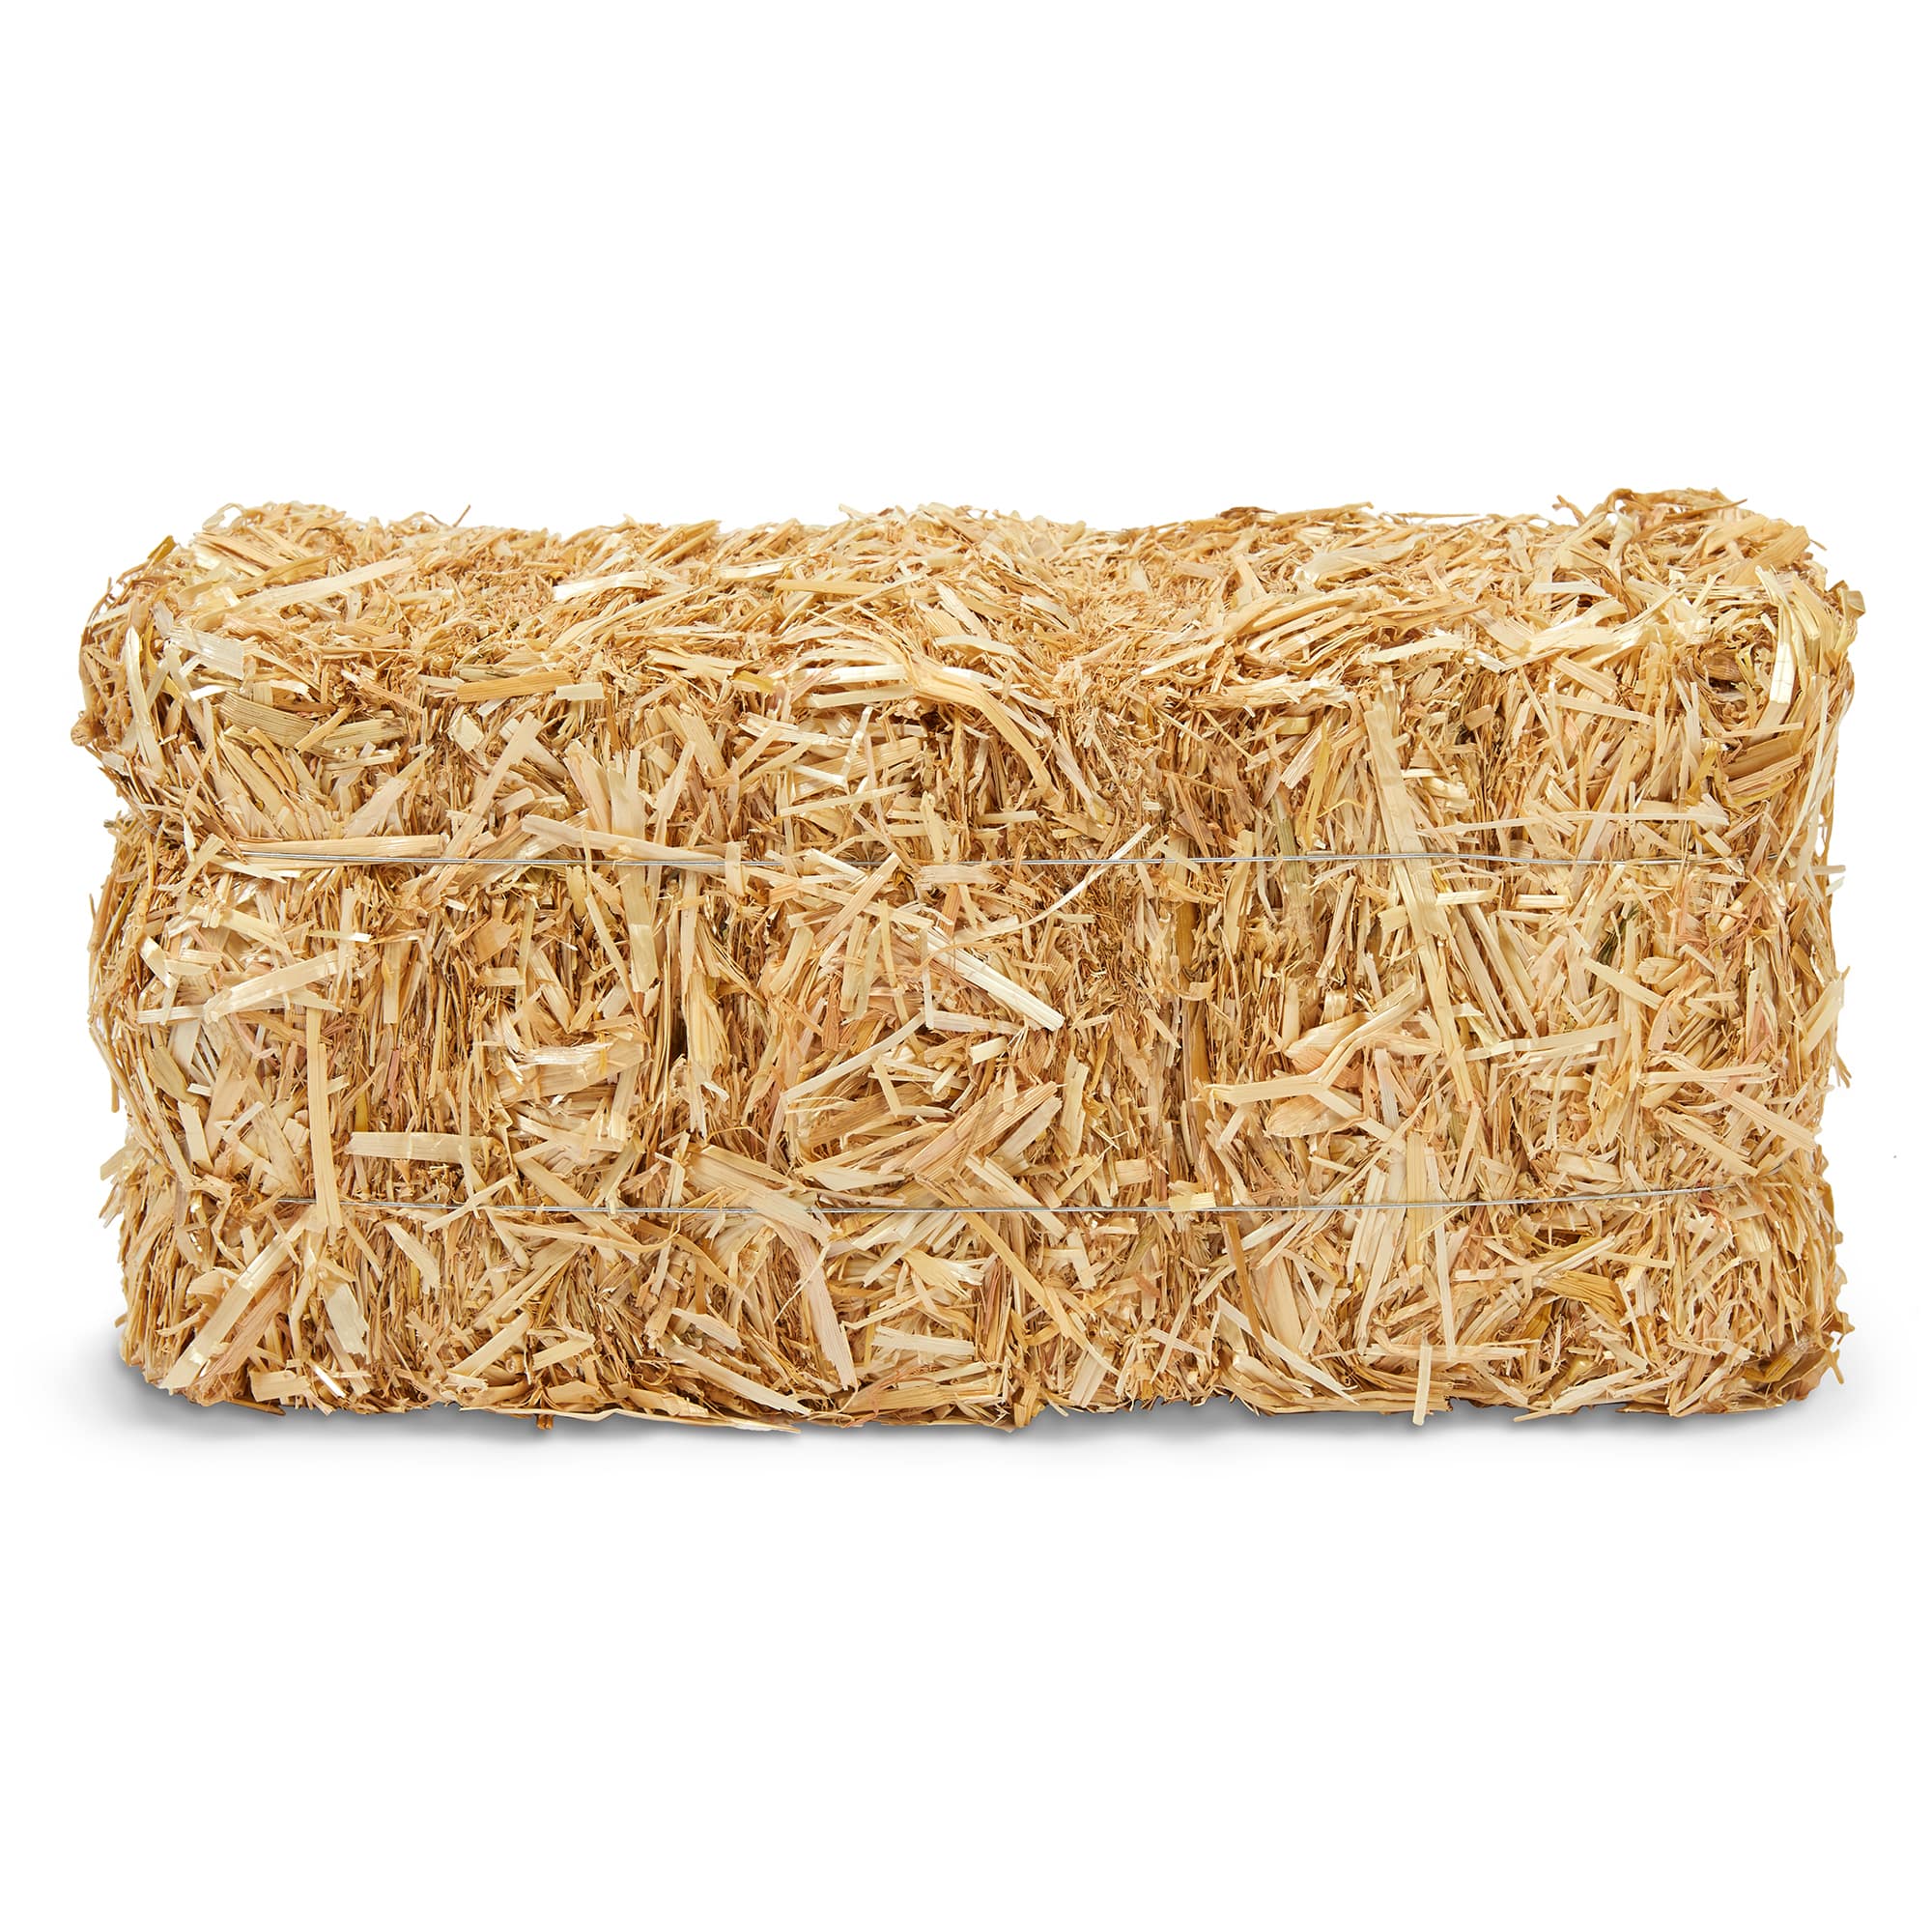 Floracraft Decorative Straw Hay Bale, 24, Fall Craft Supplies, Home Decor